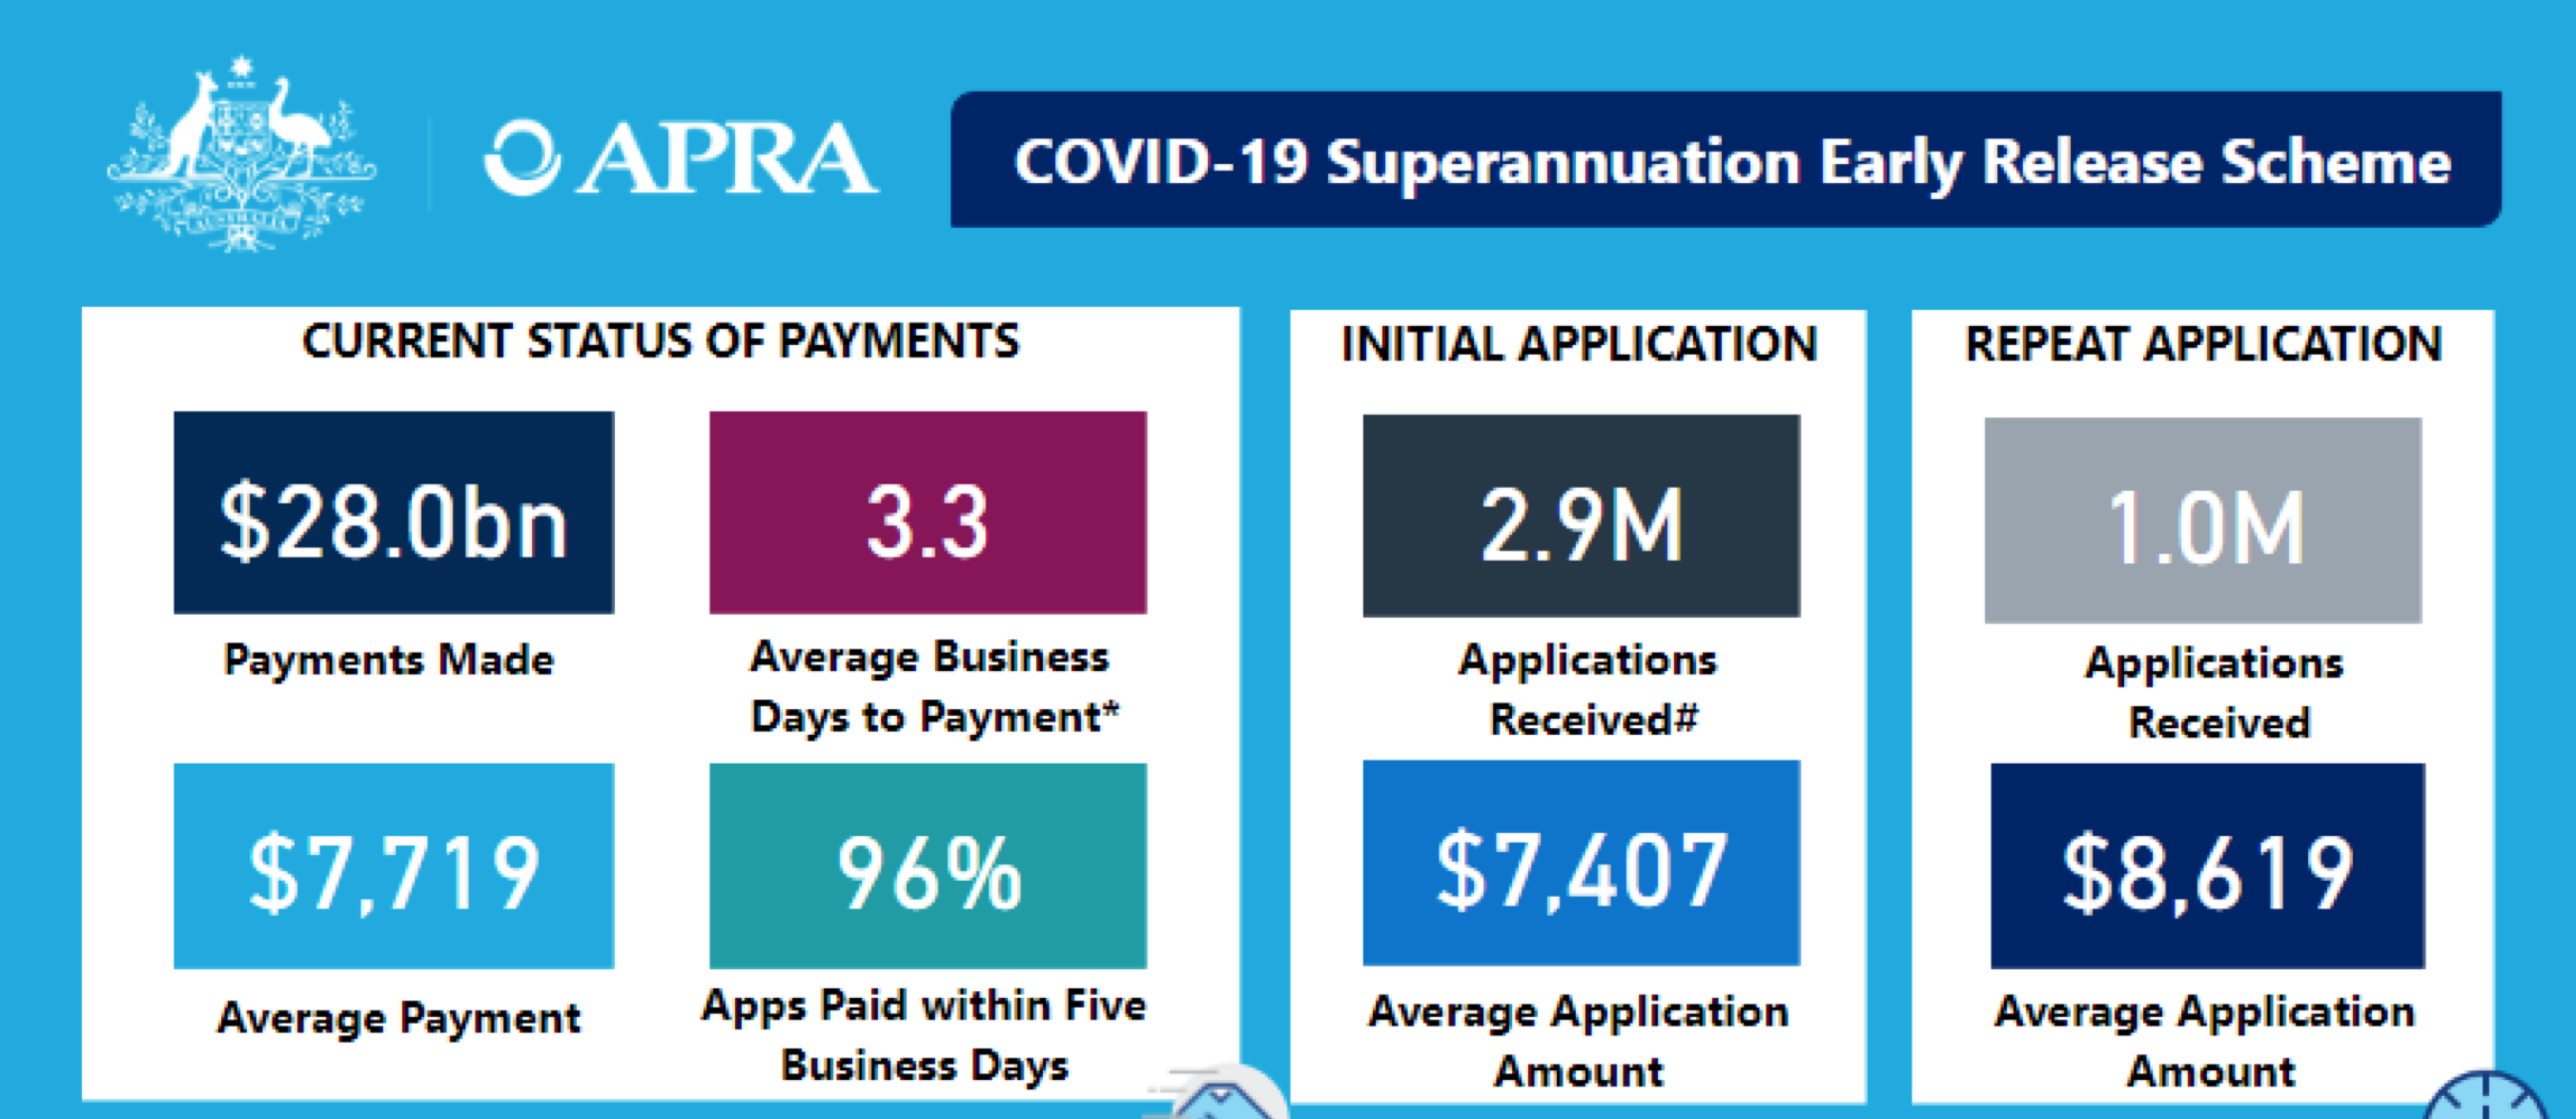 Covid-19 Superannuation Early Release Scheme | Michelle Susay